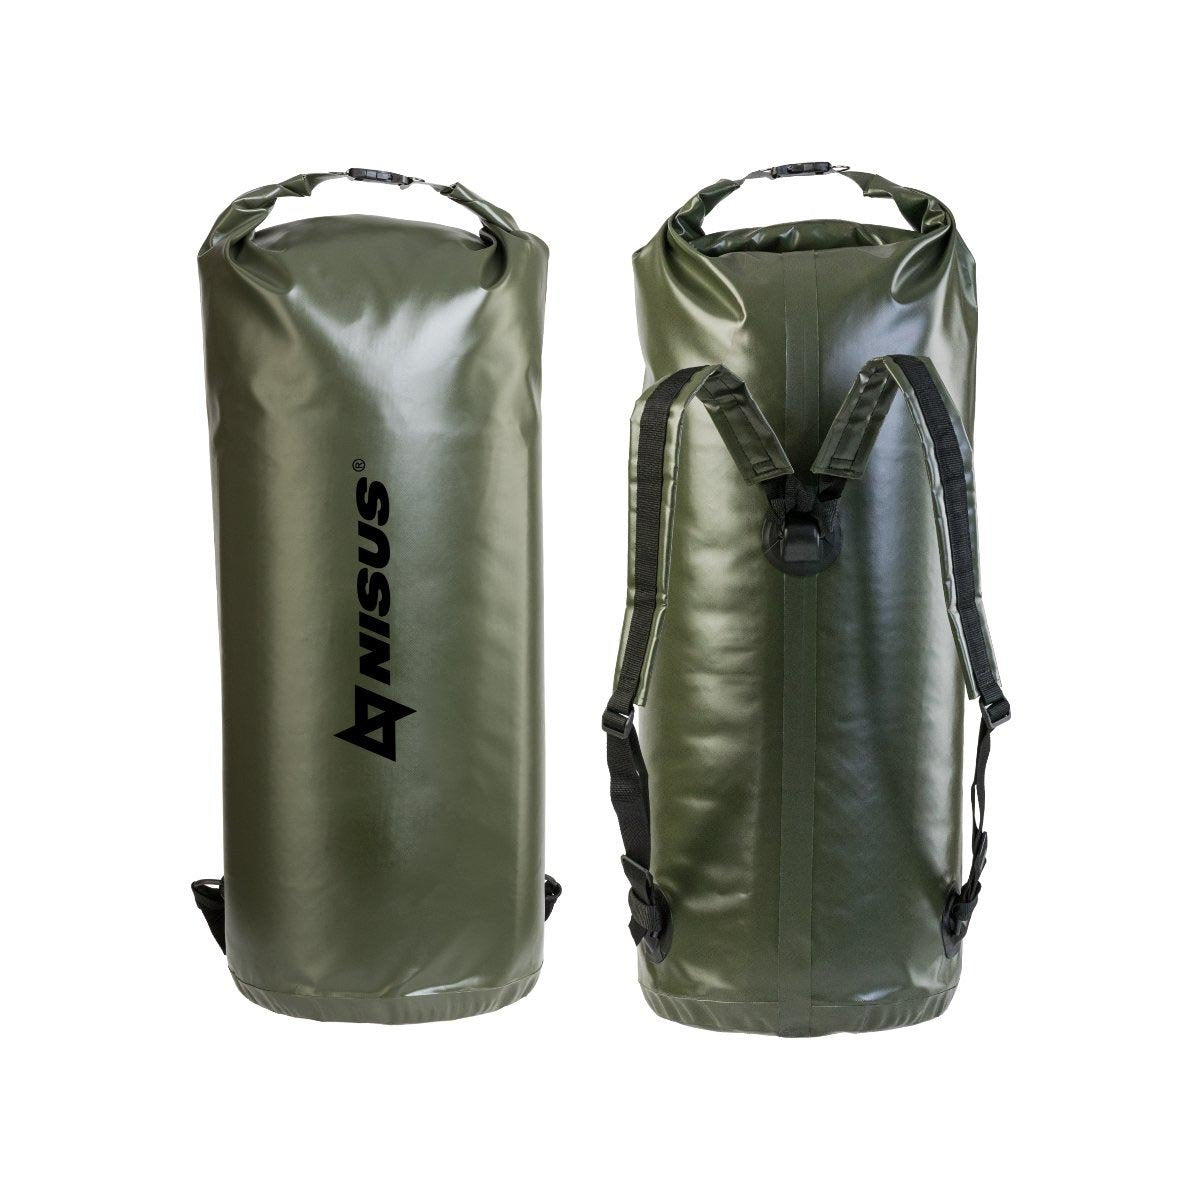 70L Waterproof Large Dry Bag, Backpack with Shoulder Straps, Khaki